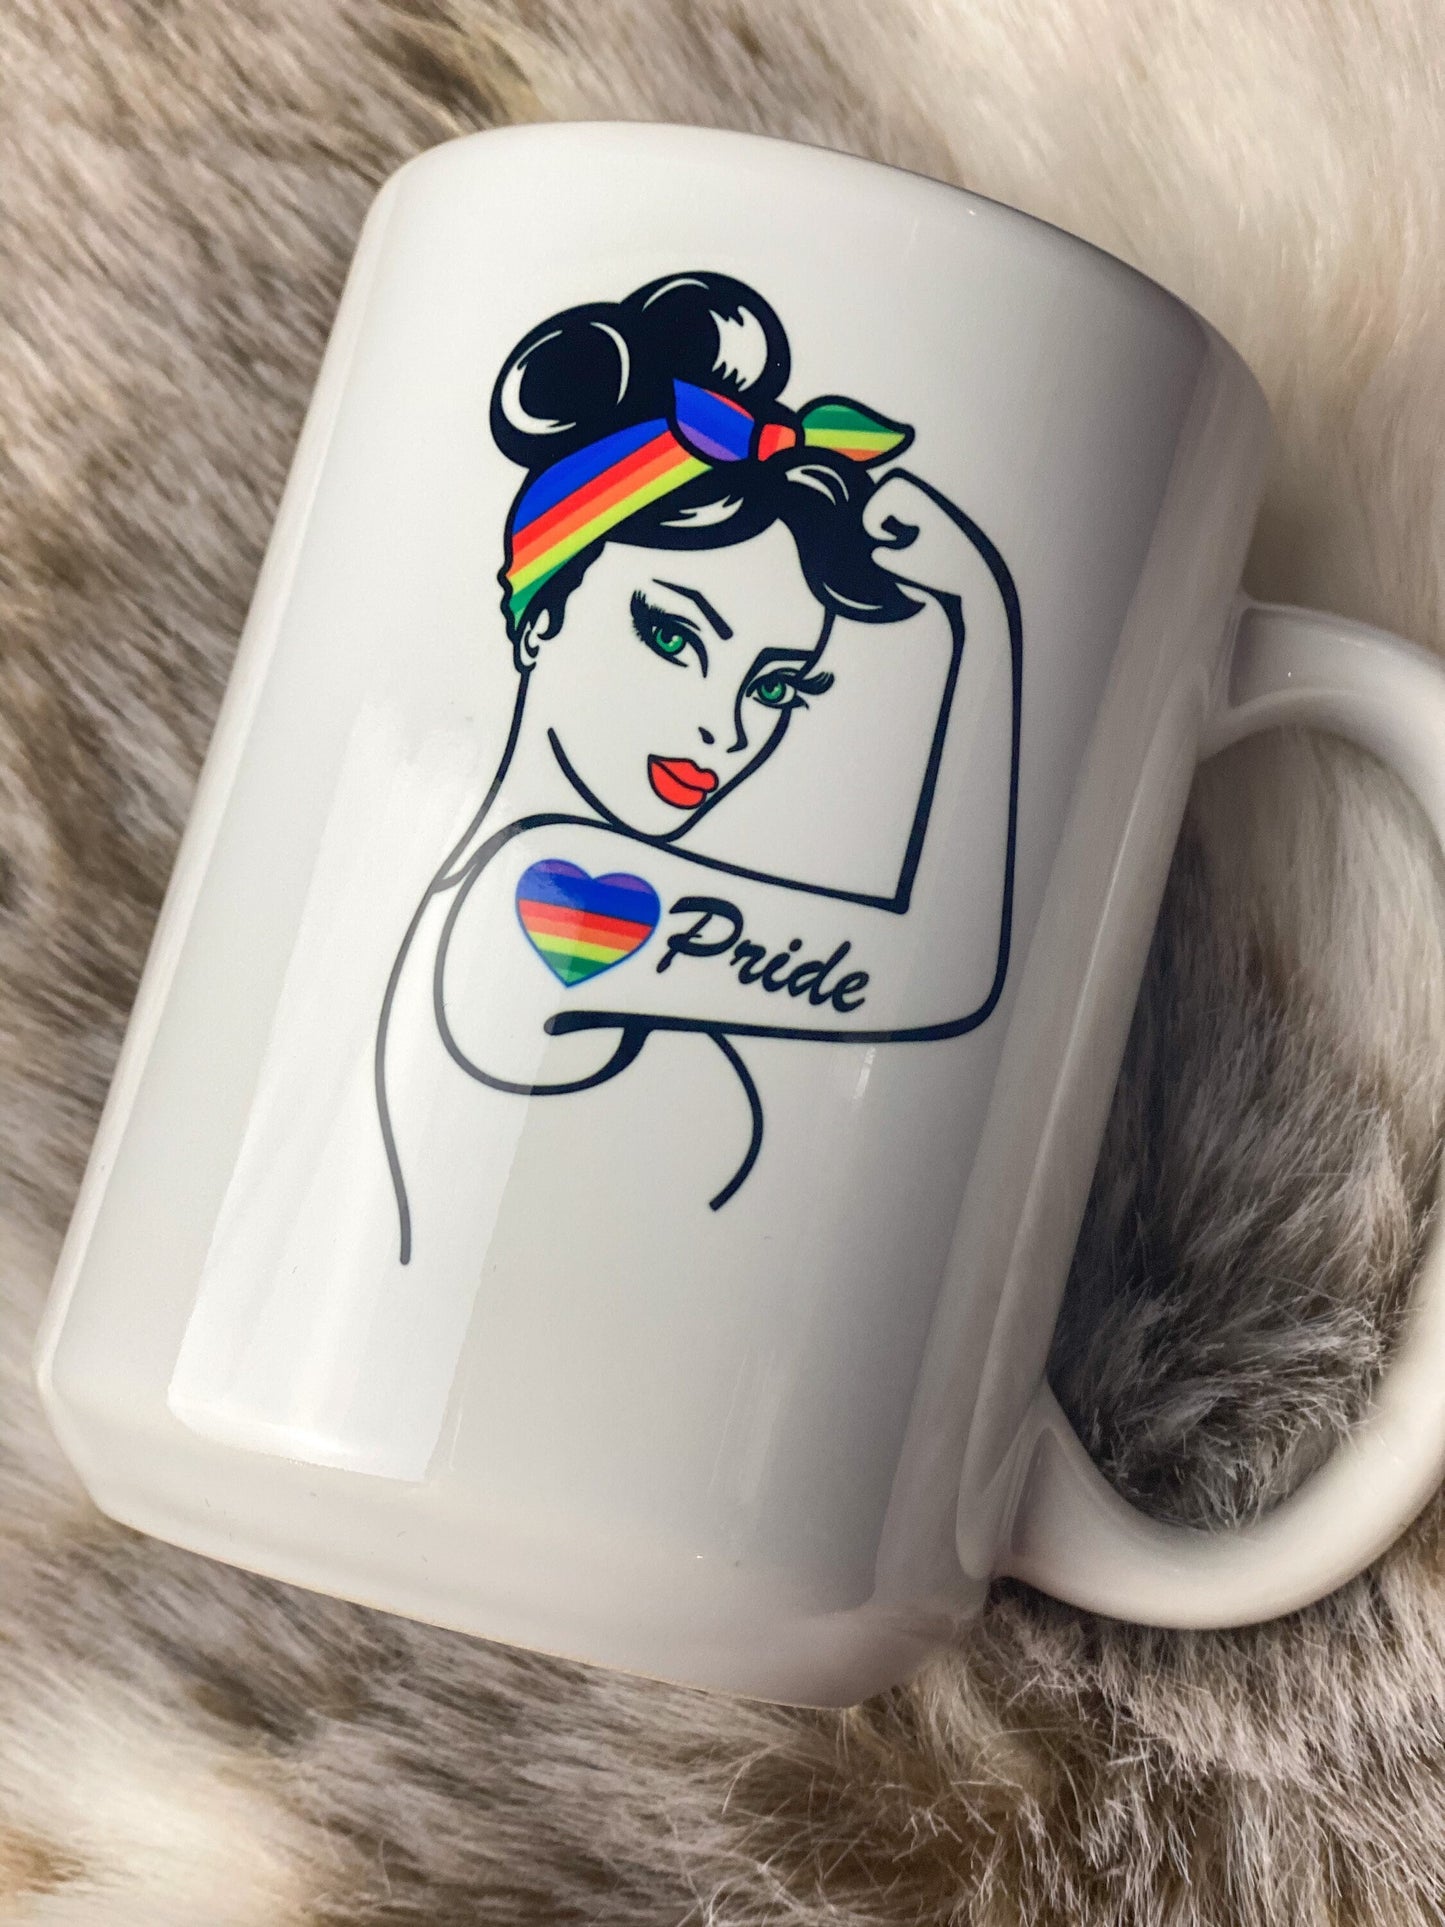 Rosie Pride Ceramic Coffee Mug, Humanity Coffee Cup, Equality, LGBTQ, Ally, Pride Month